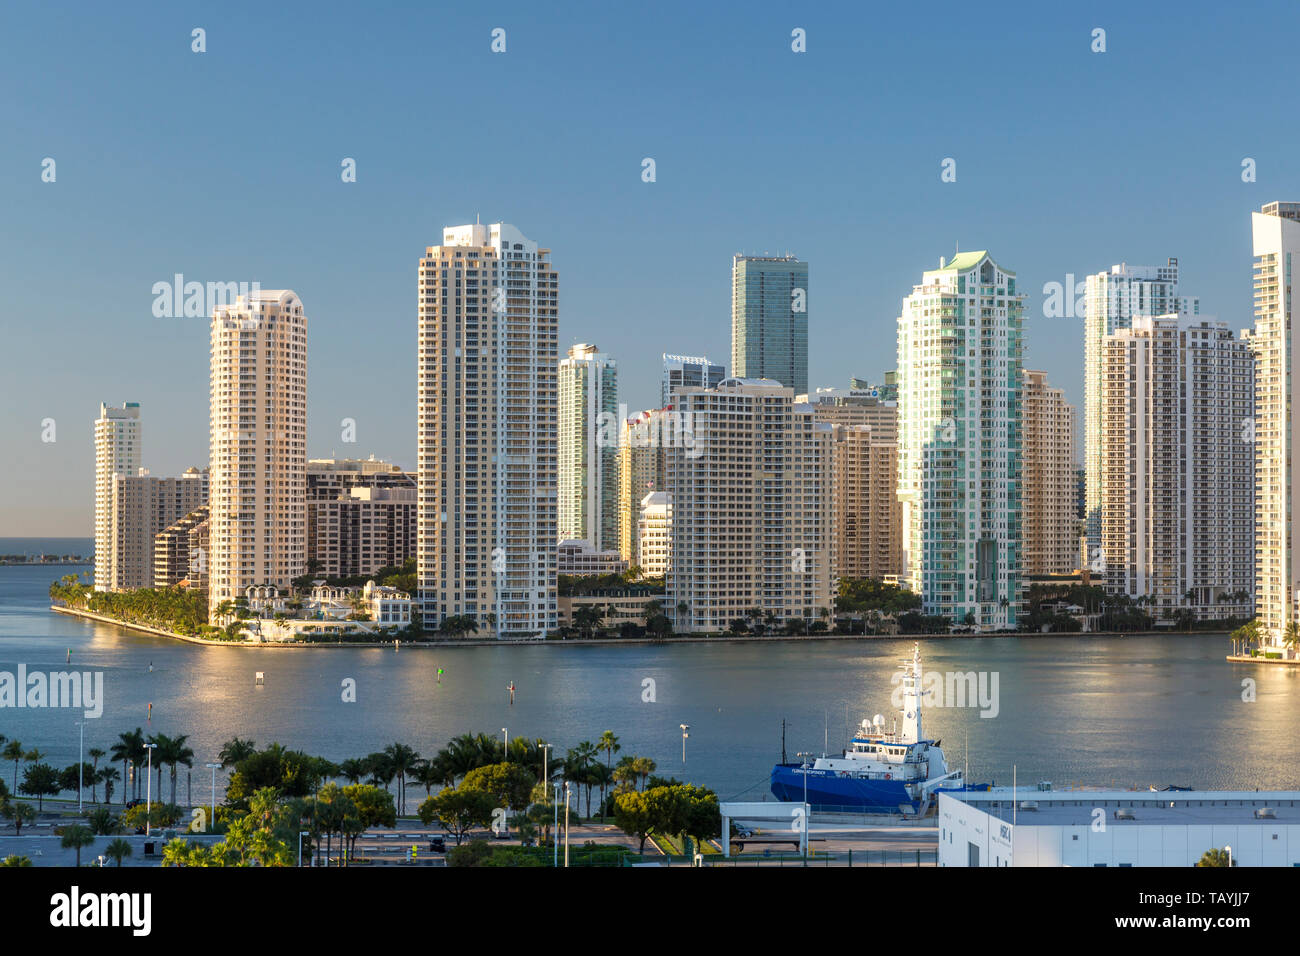 Brickell Key or Claughton Island Condominium Towers on a man-made island off the mainland, Miami, Florida, USA Stock Photo